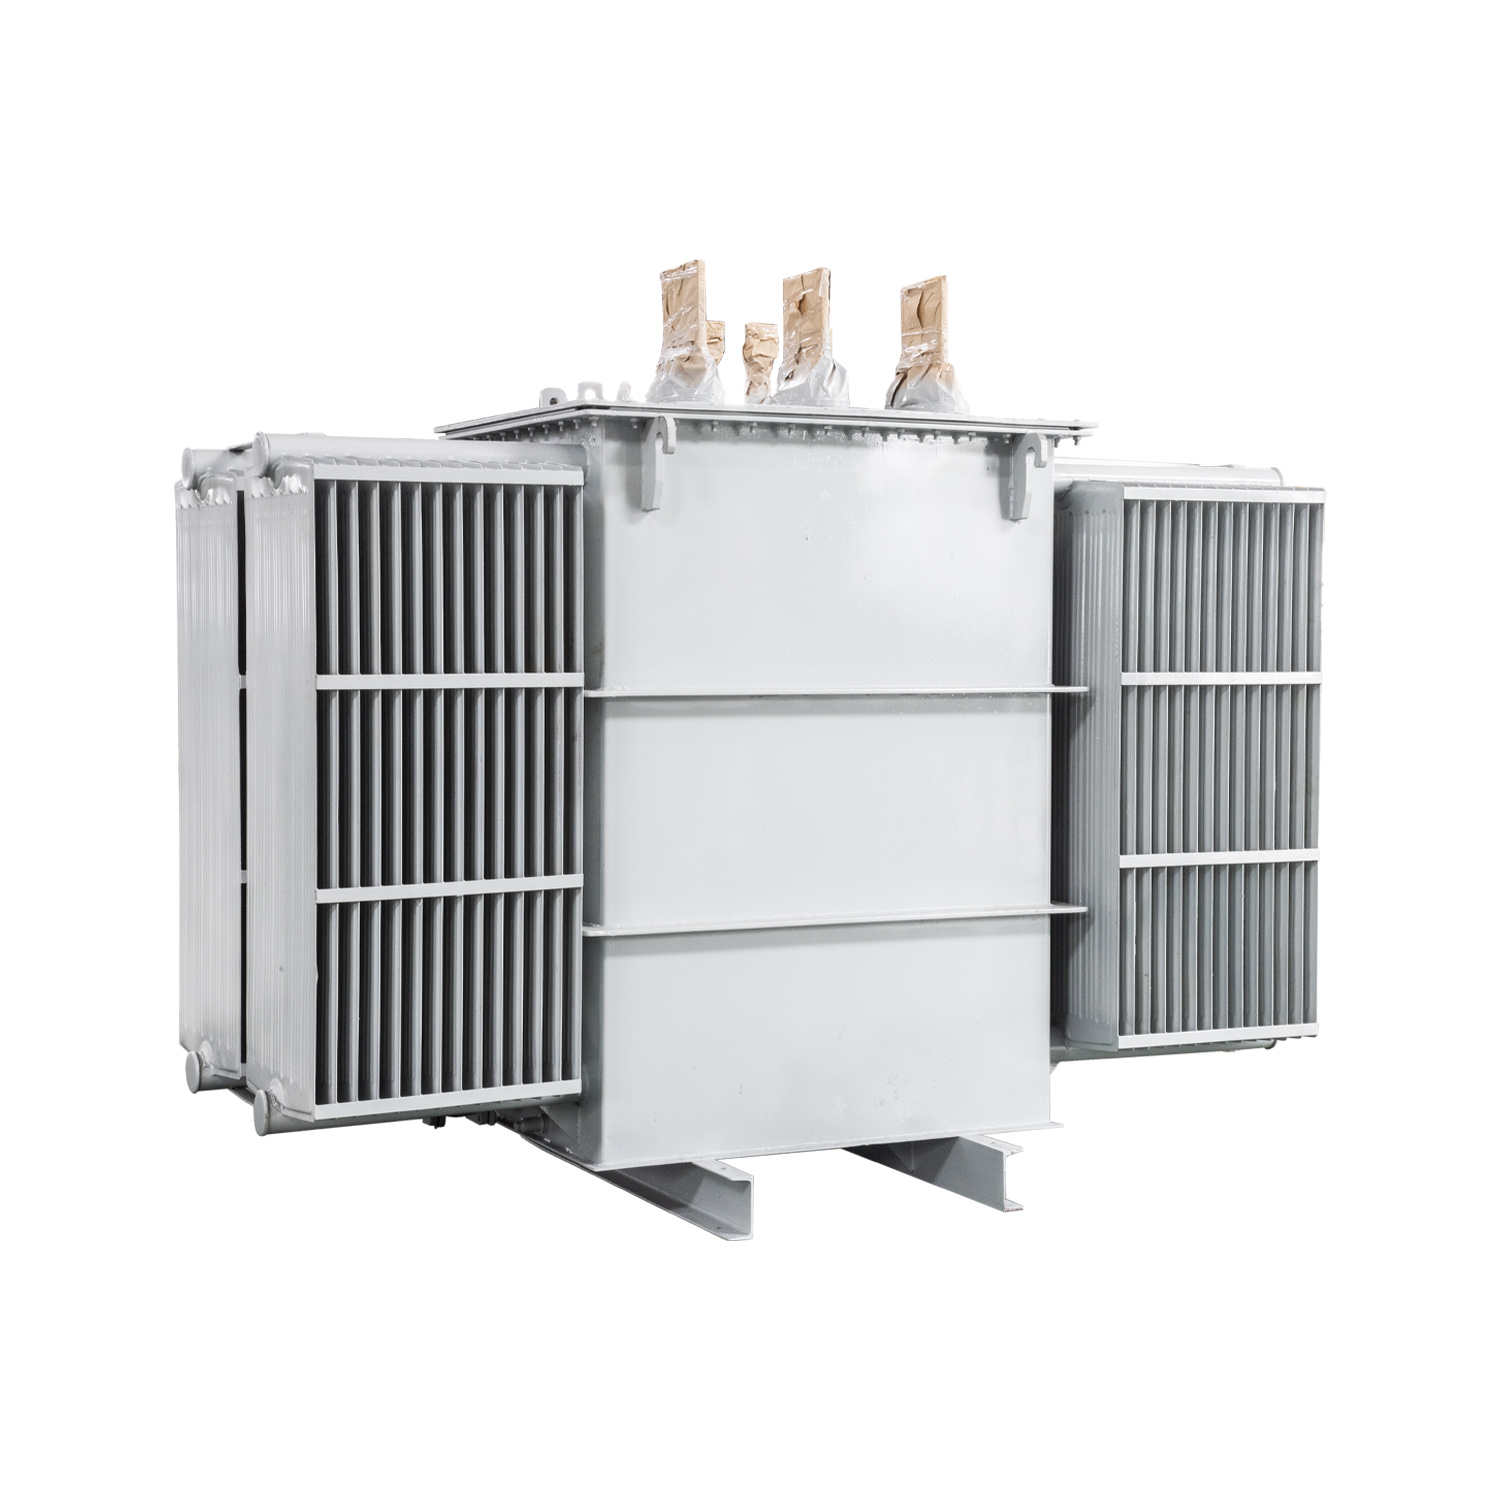 CE 1600kva thermal processing magnetic voltage regulator